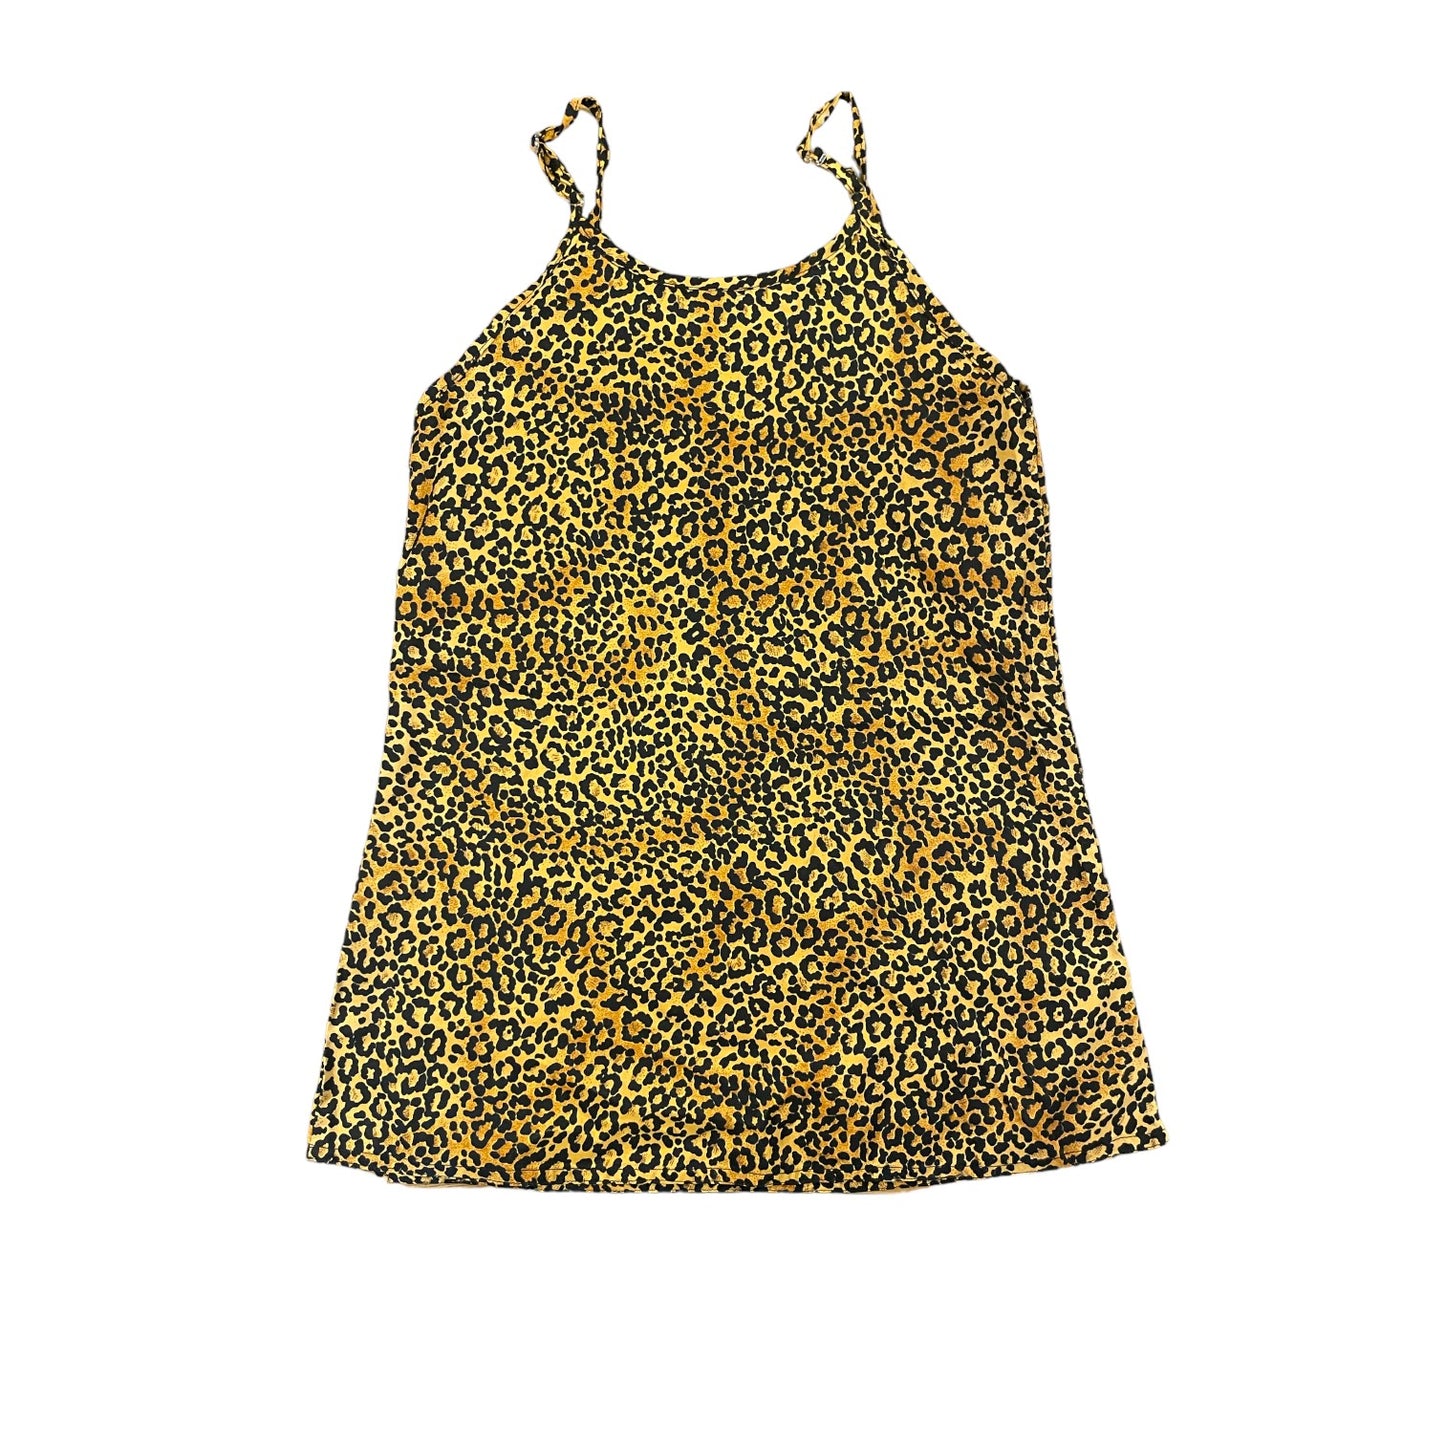 Caribbean Girls Dress Cheetah Print Size S (6-7)